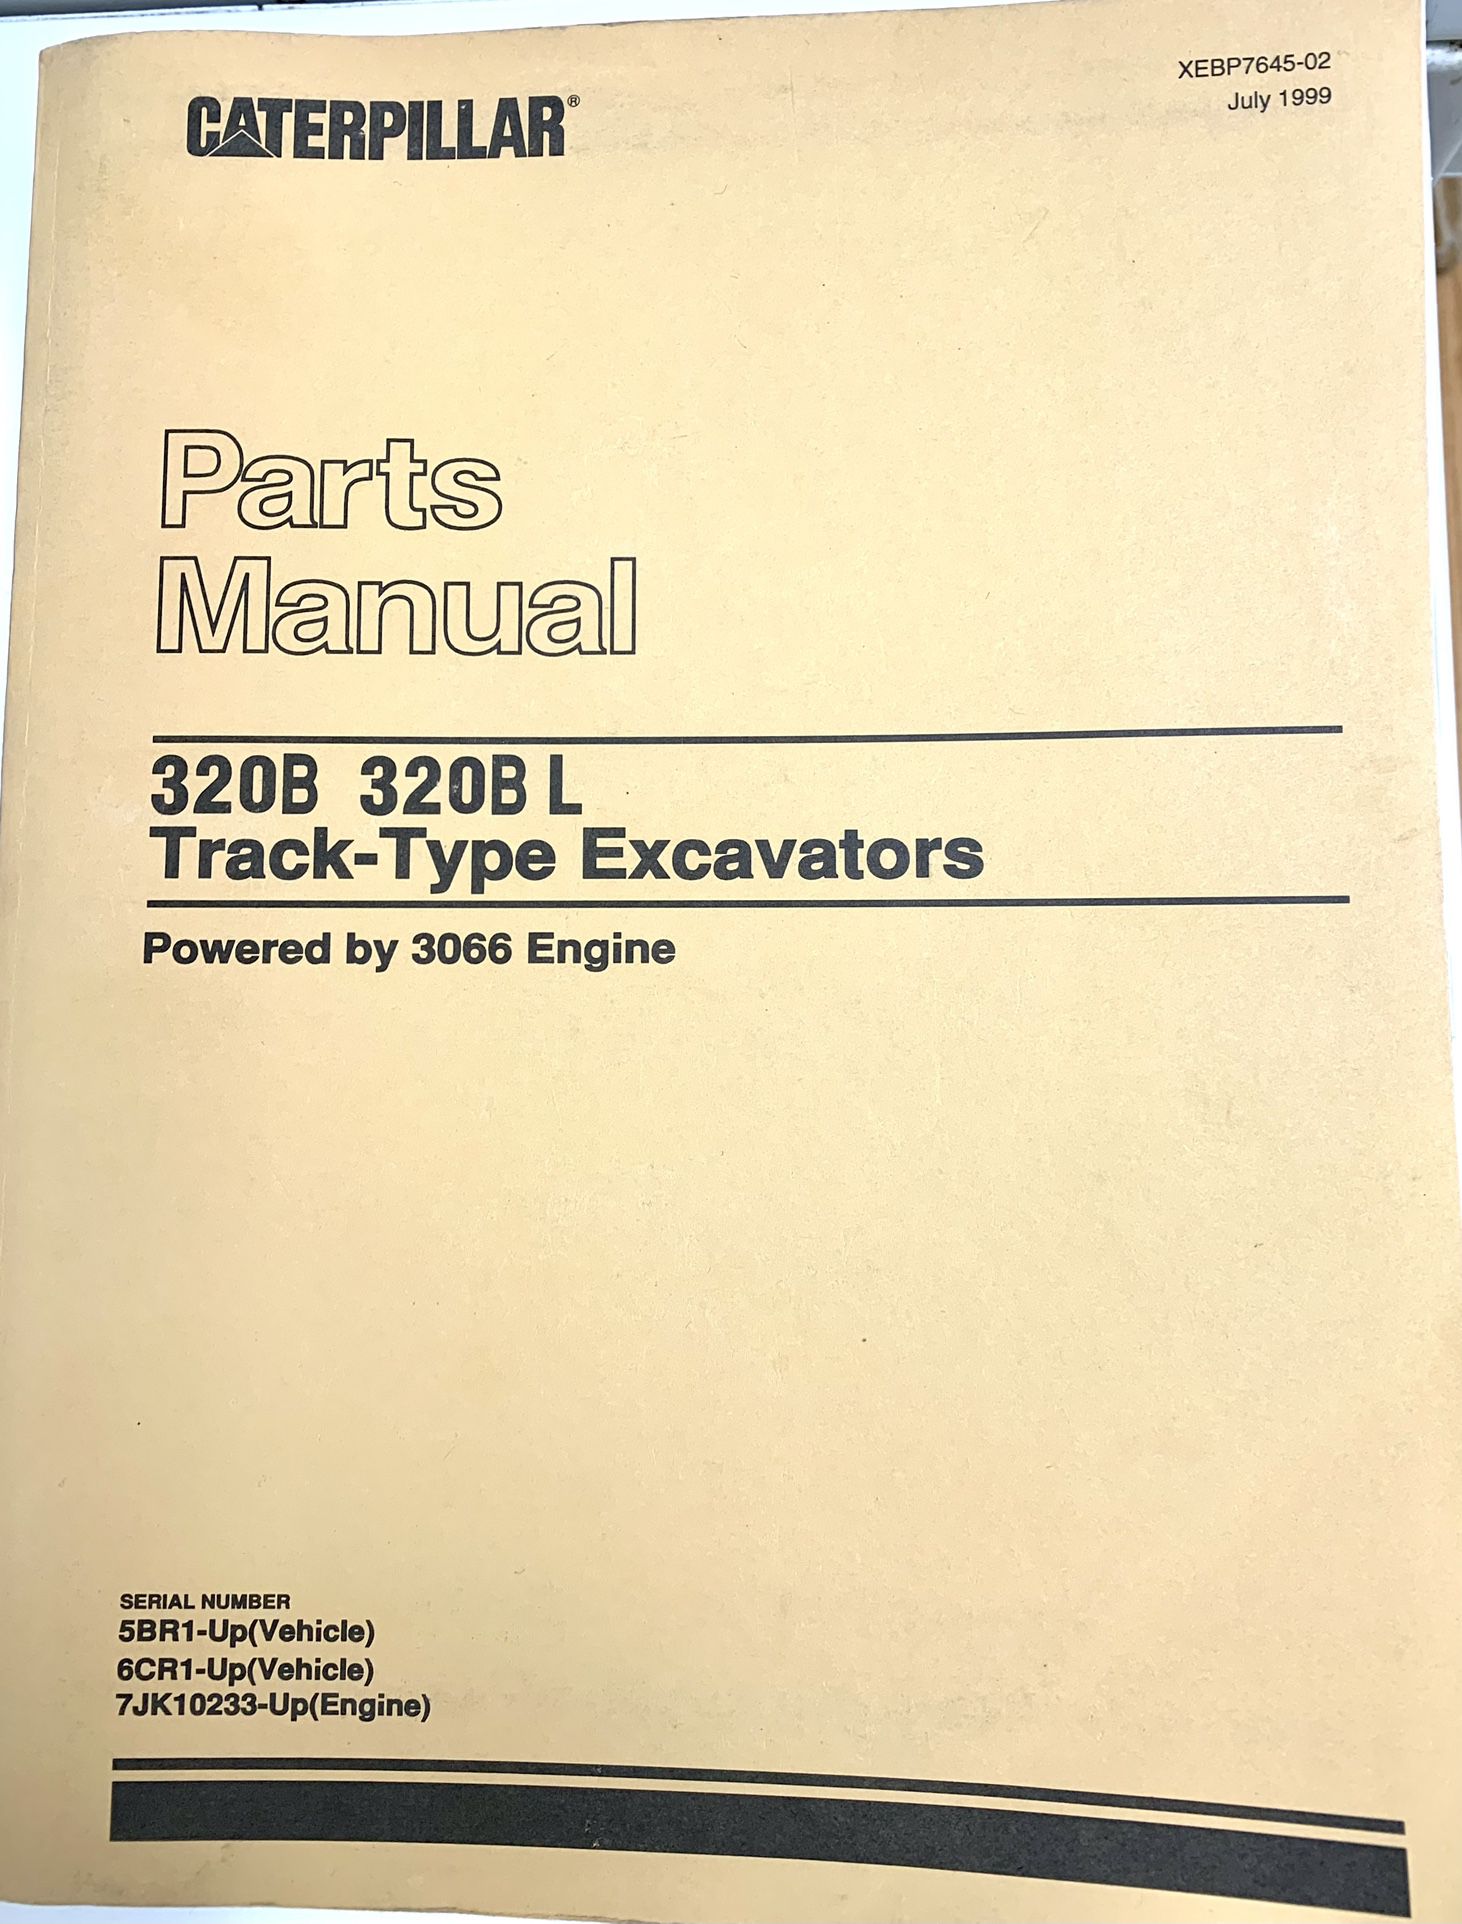 Caterpillar 320B 320B L Track-Type Excavators Parts Manual Book 3006 Engine 5BR1  